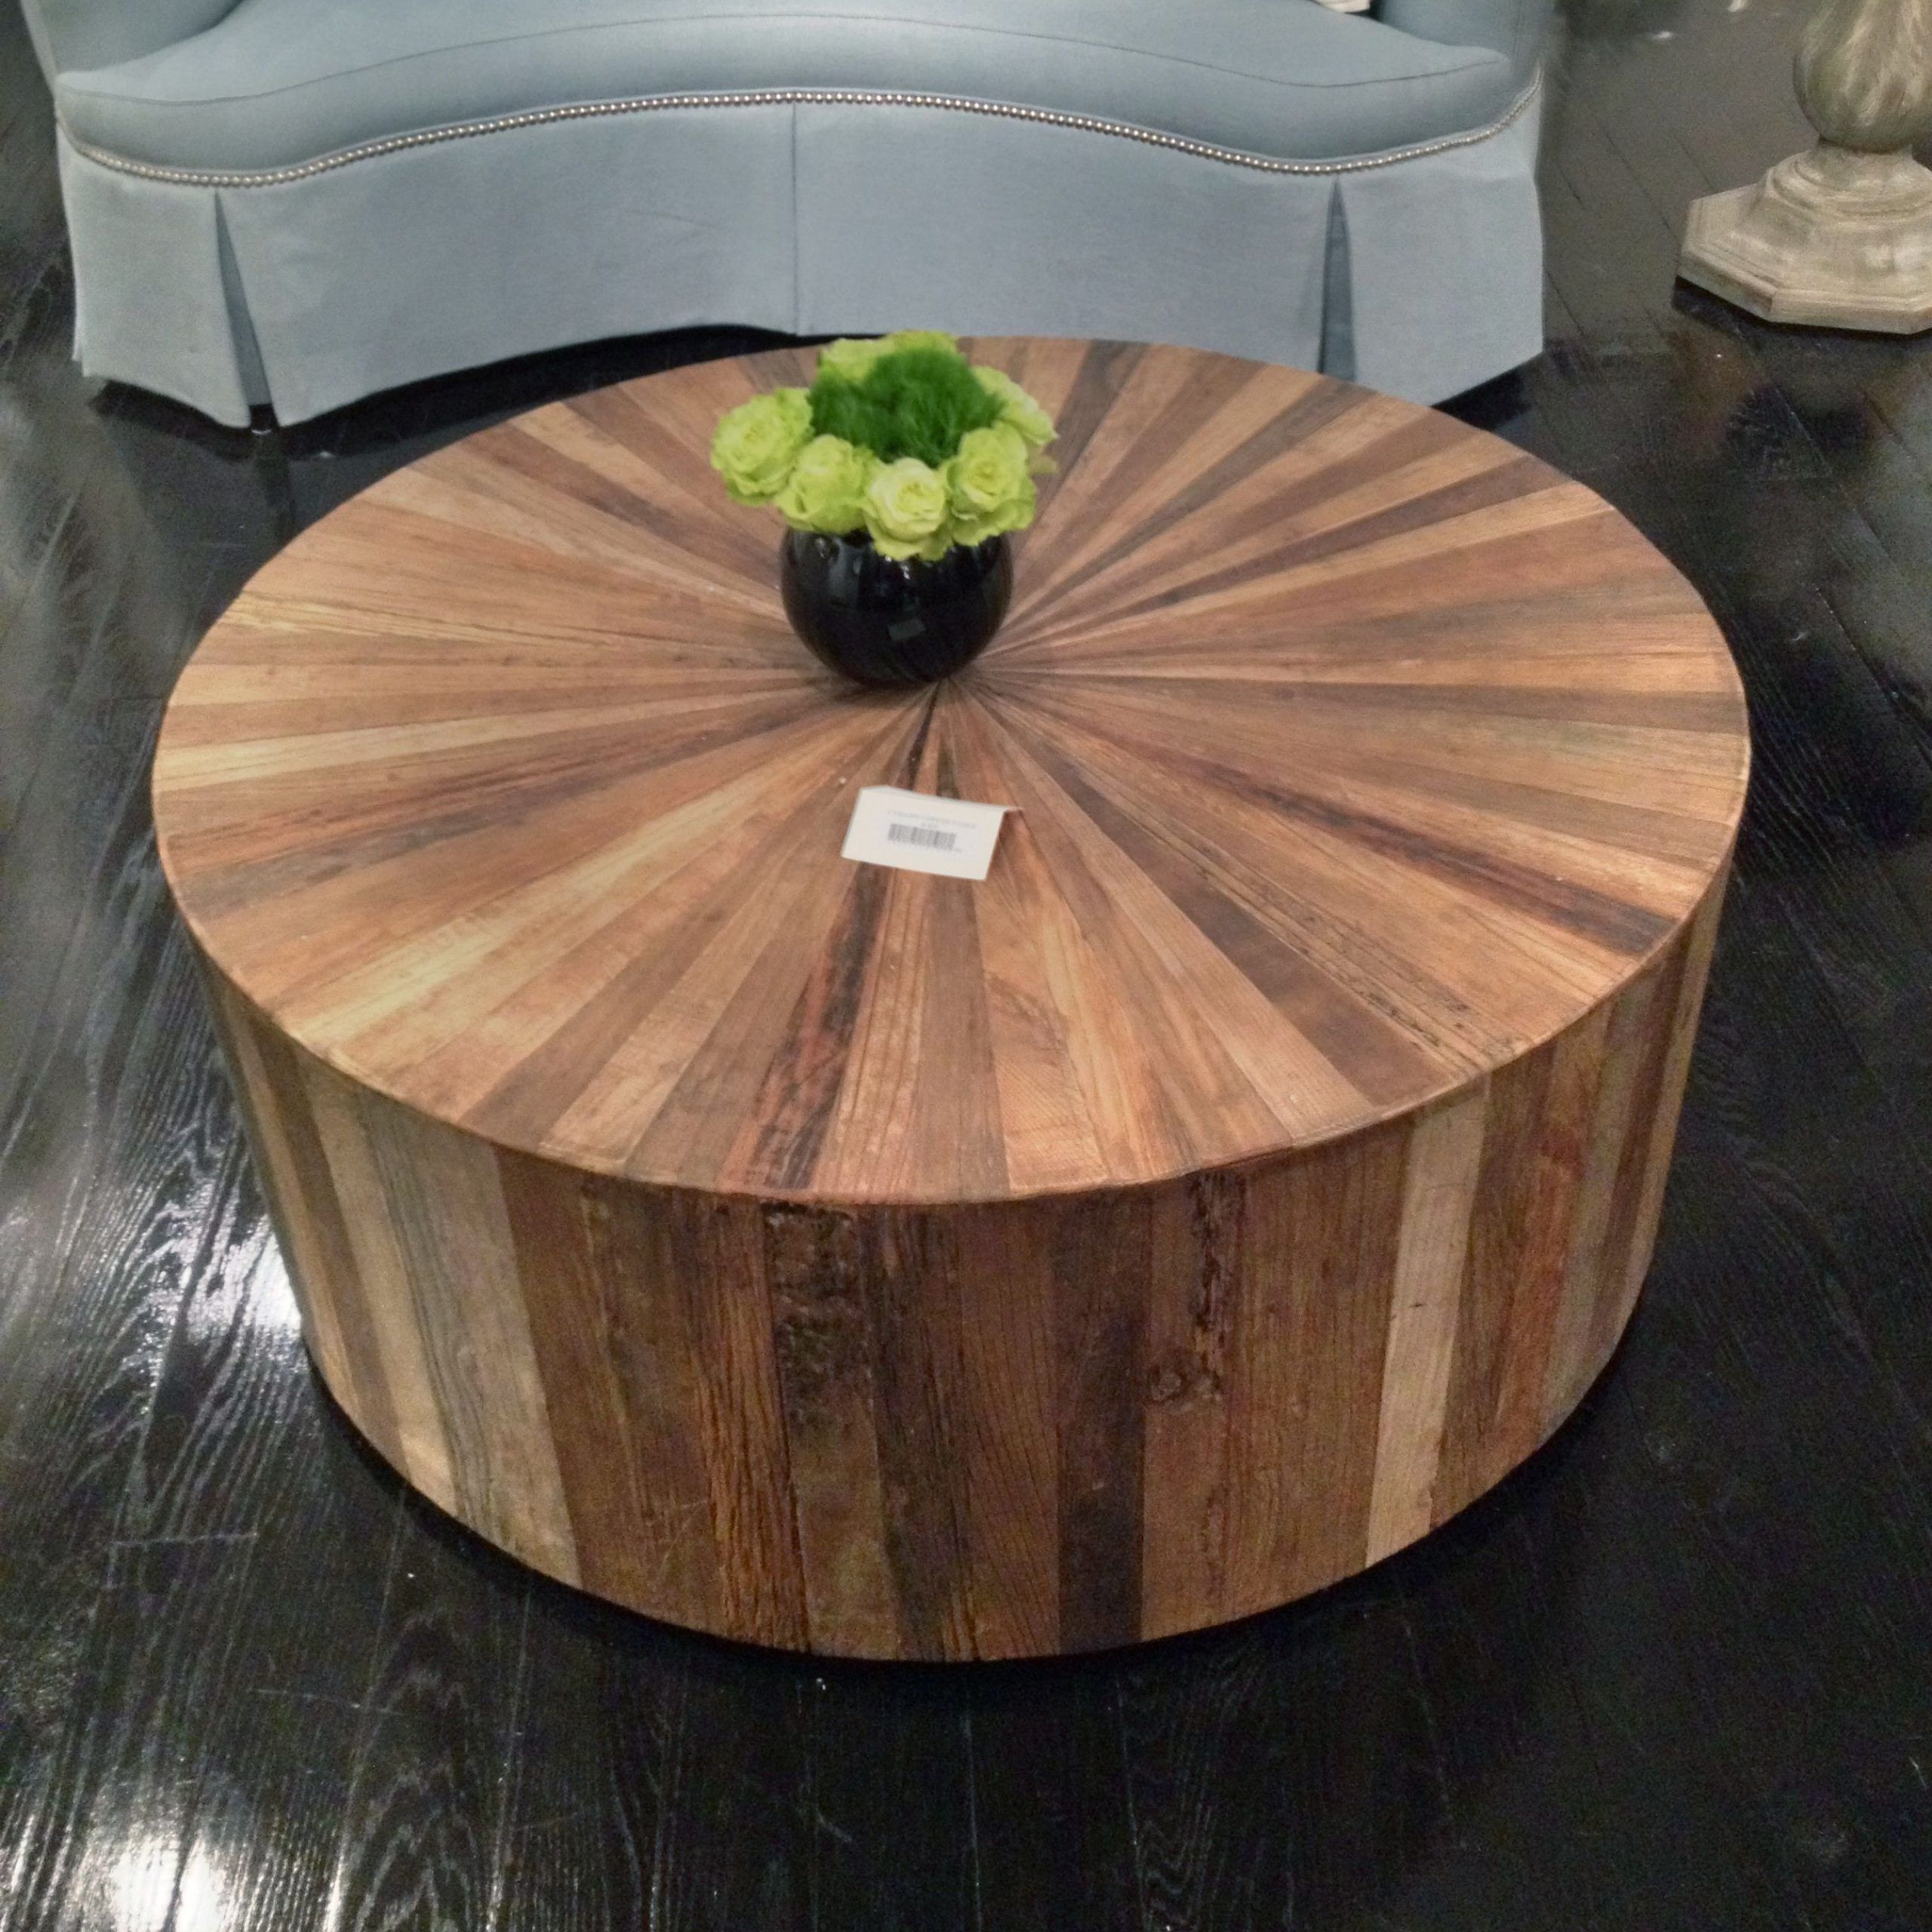 Round Wood Coffee Tables With Storage : Yj Round Storage Coffee Table With Round Coffee Tables With Storage (Photo 14 of 15)